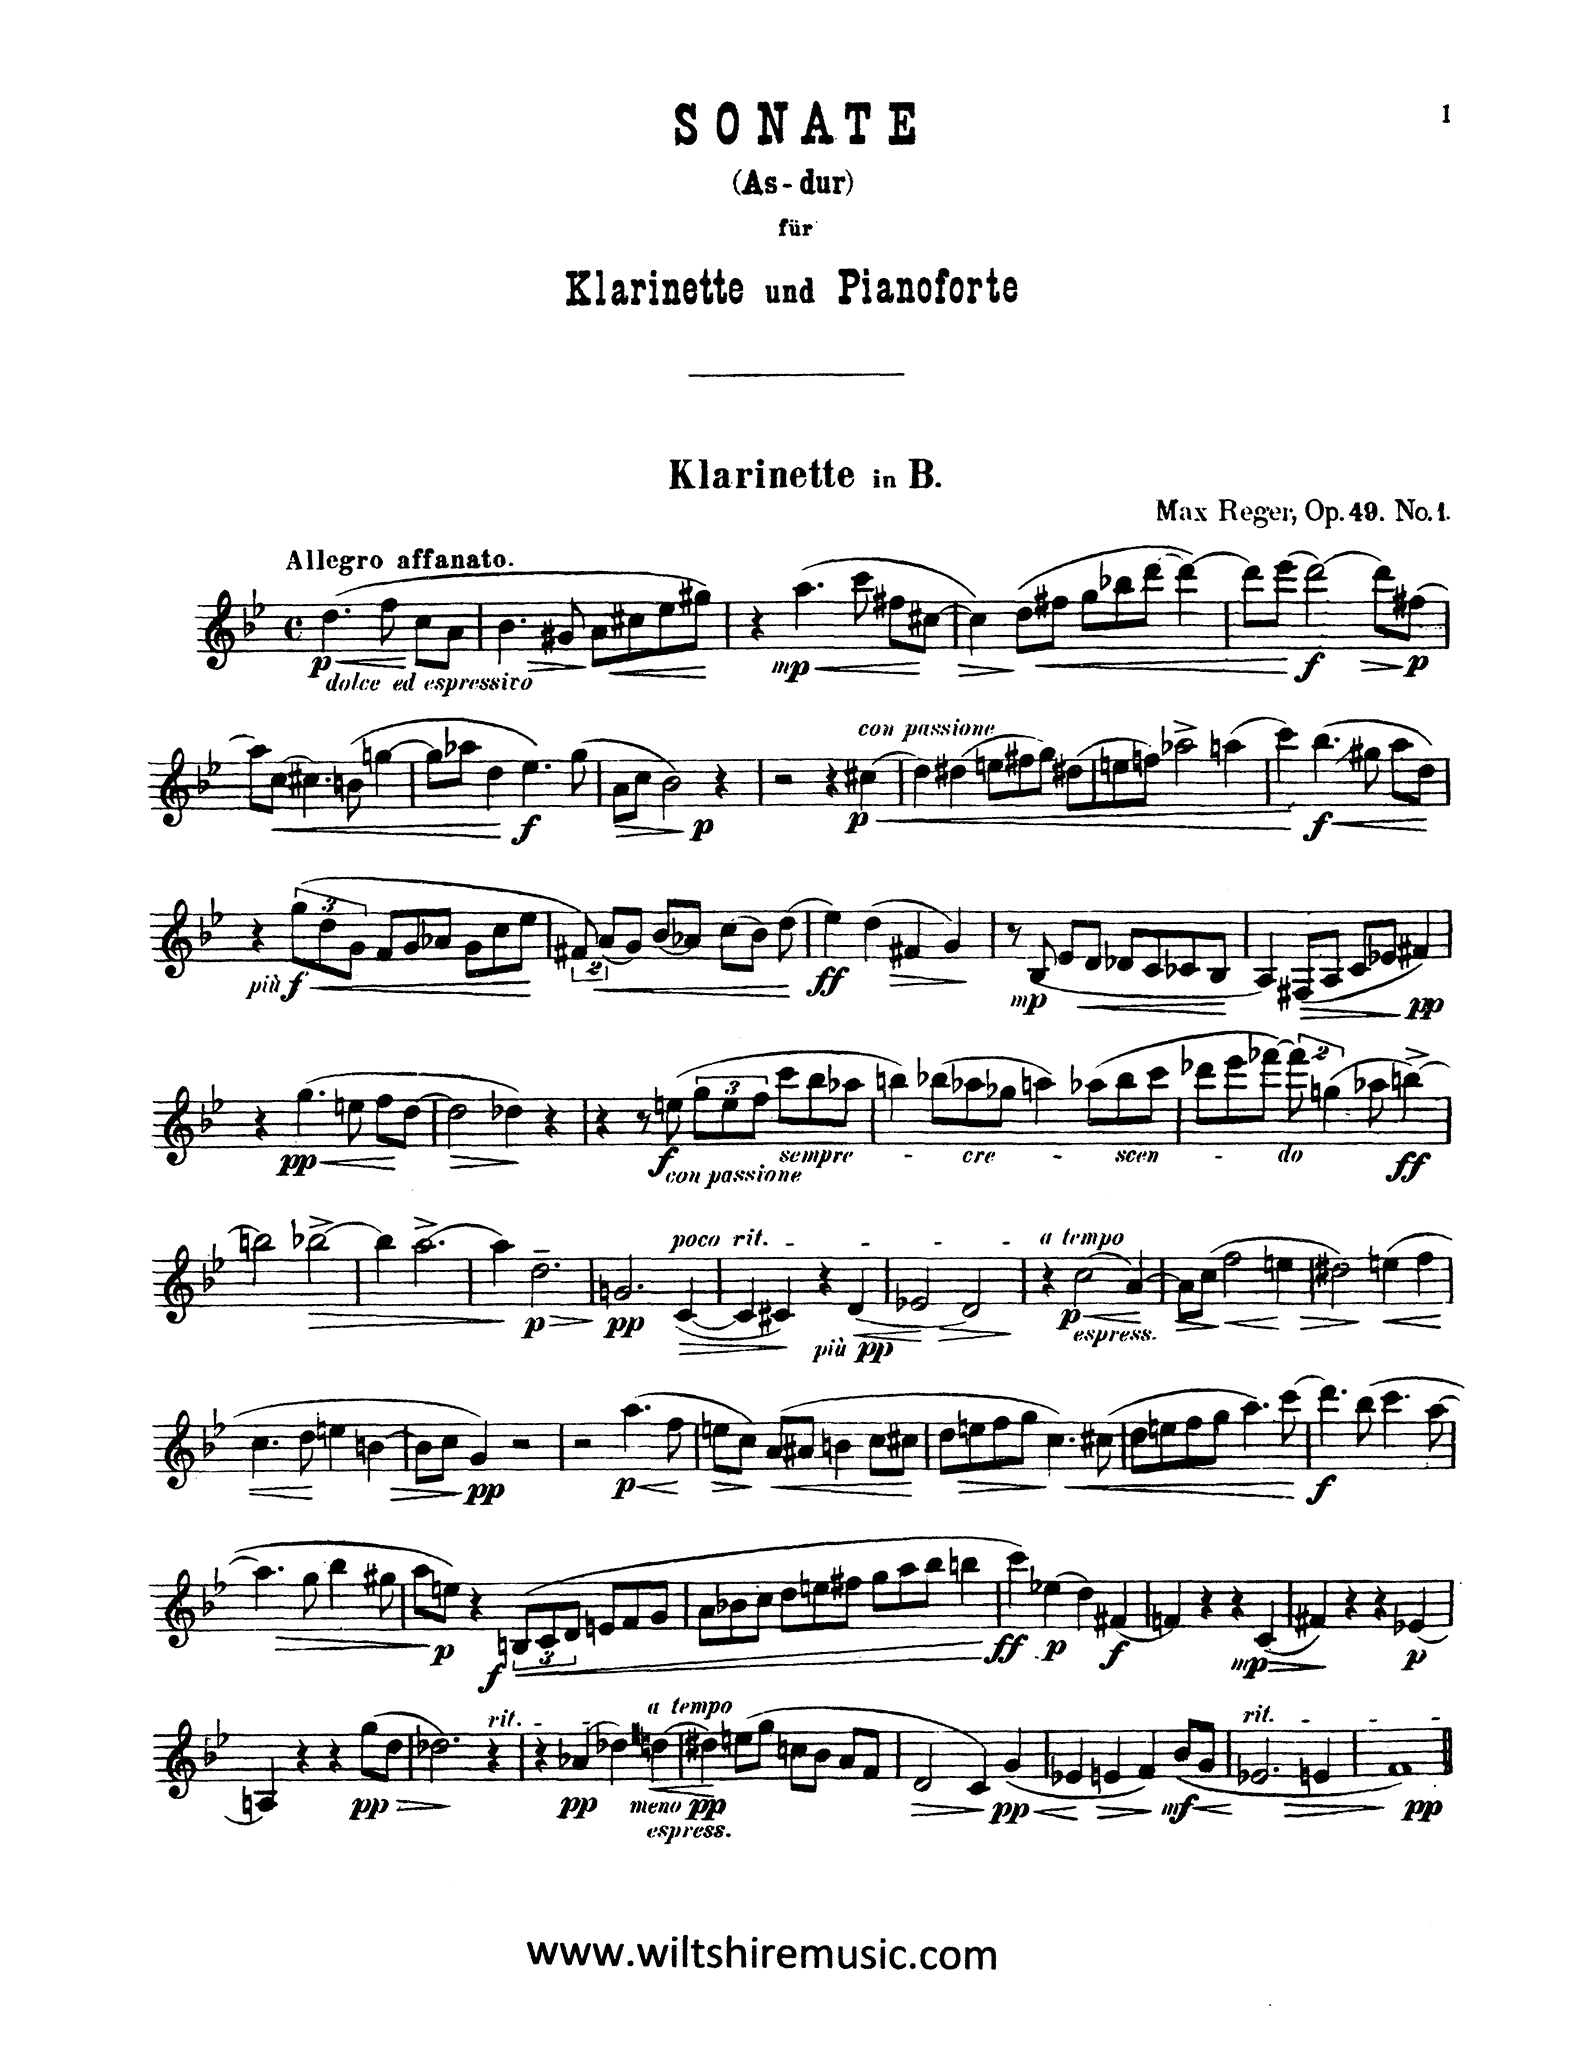 Reger Sonata in A-flat Major, Op. 49 No. 1 Clarinet part